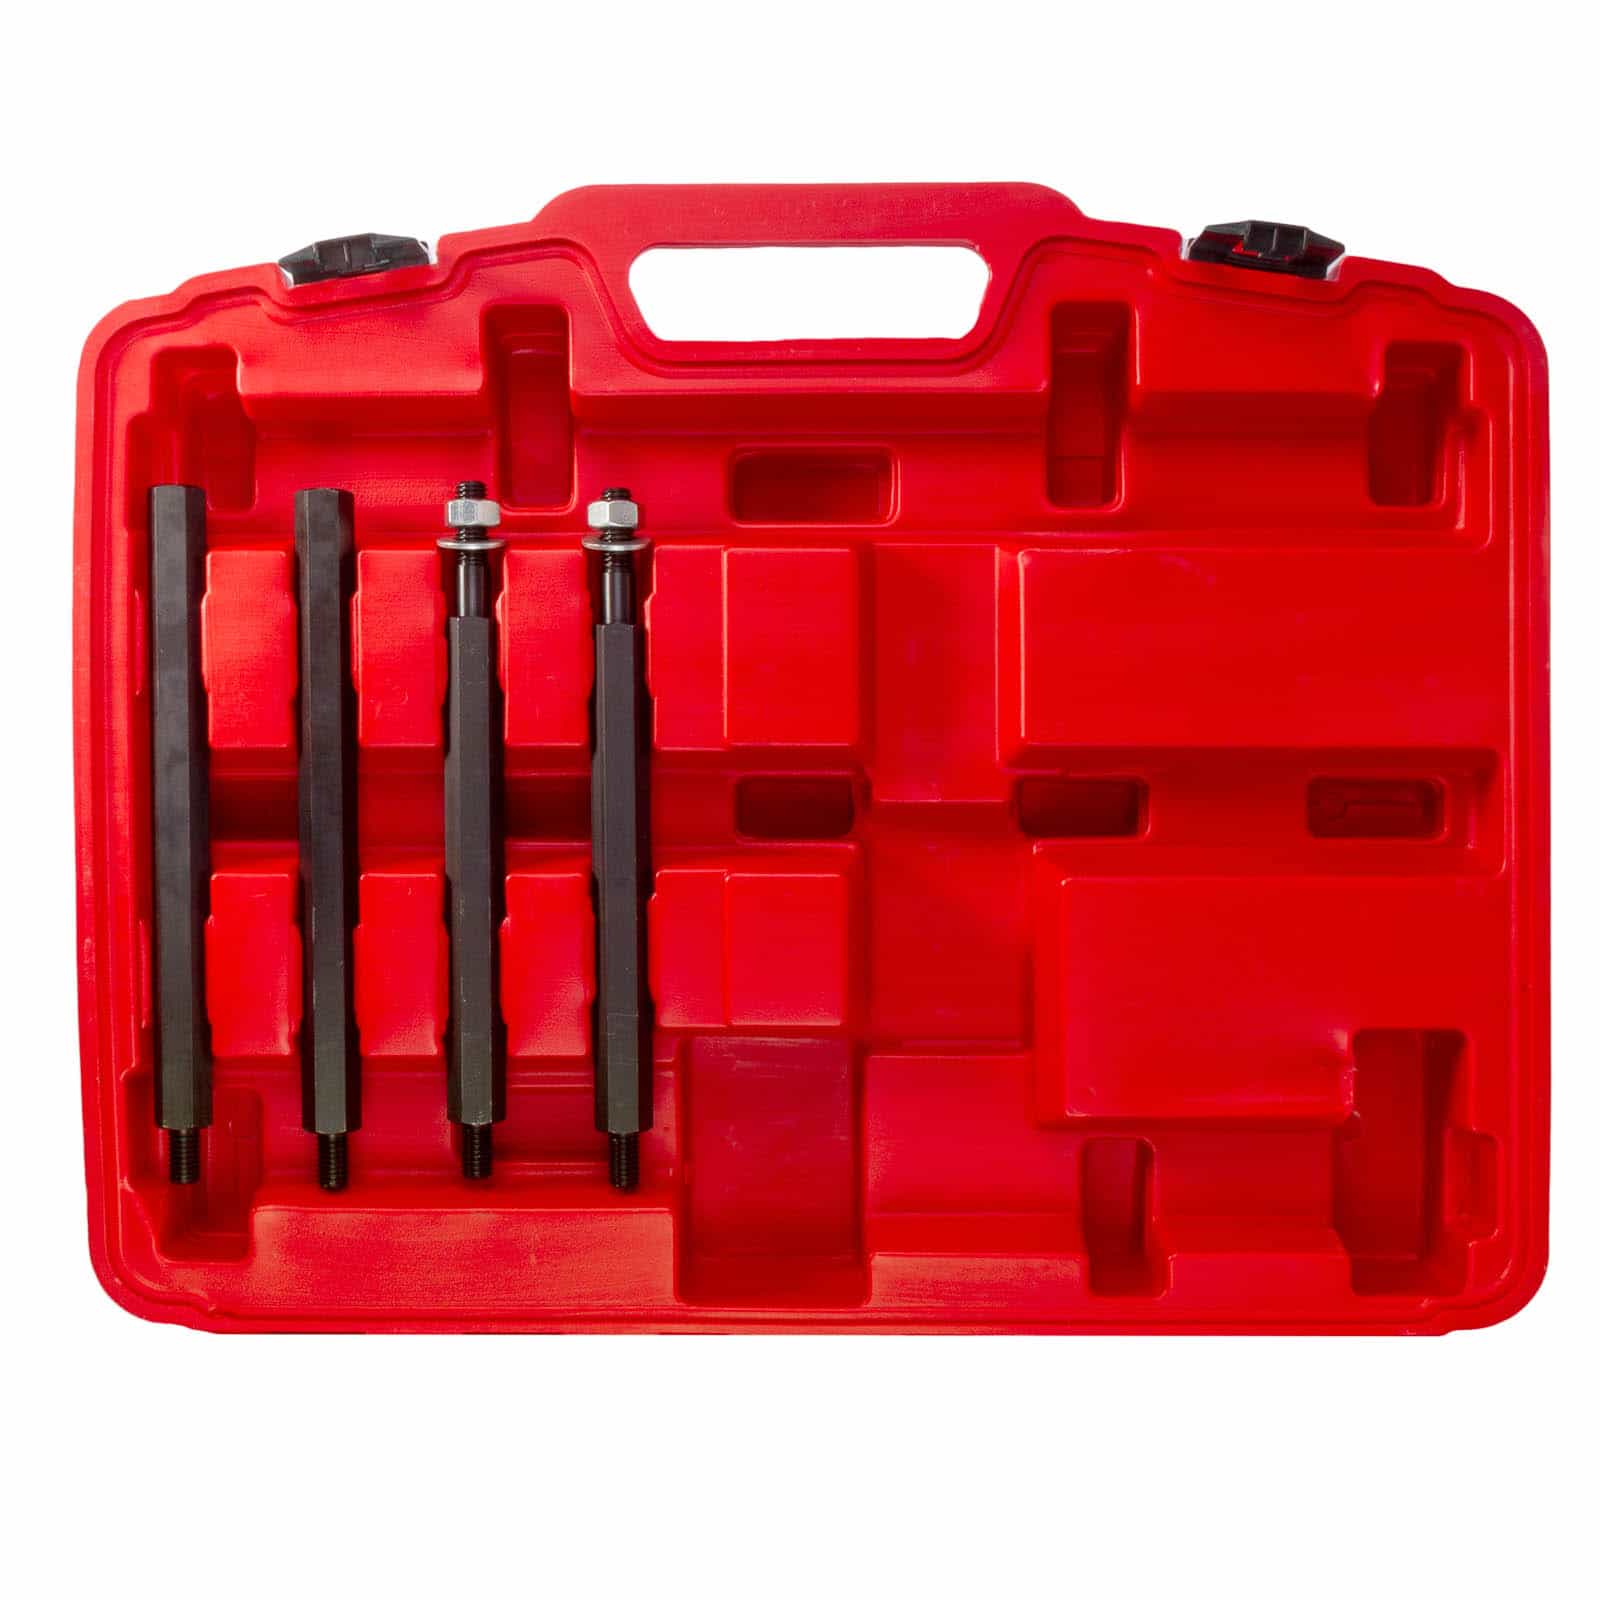 Hanse Werkzeuge® 23-delige lagertrekker set in koffer